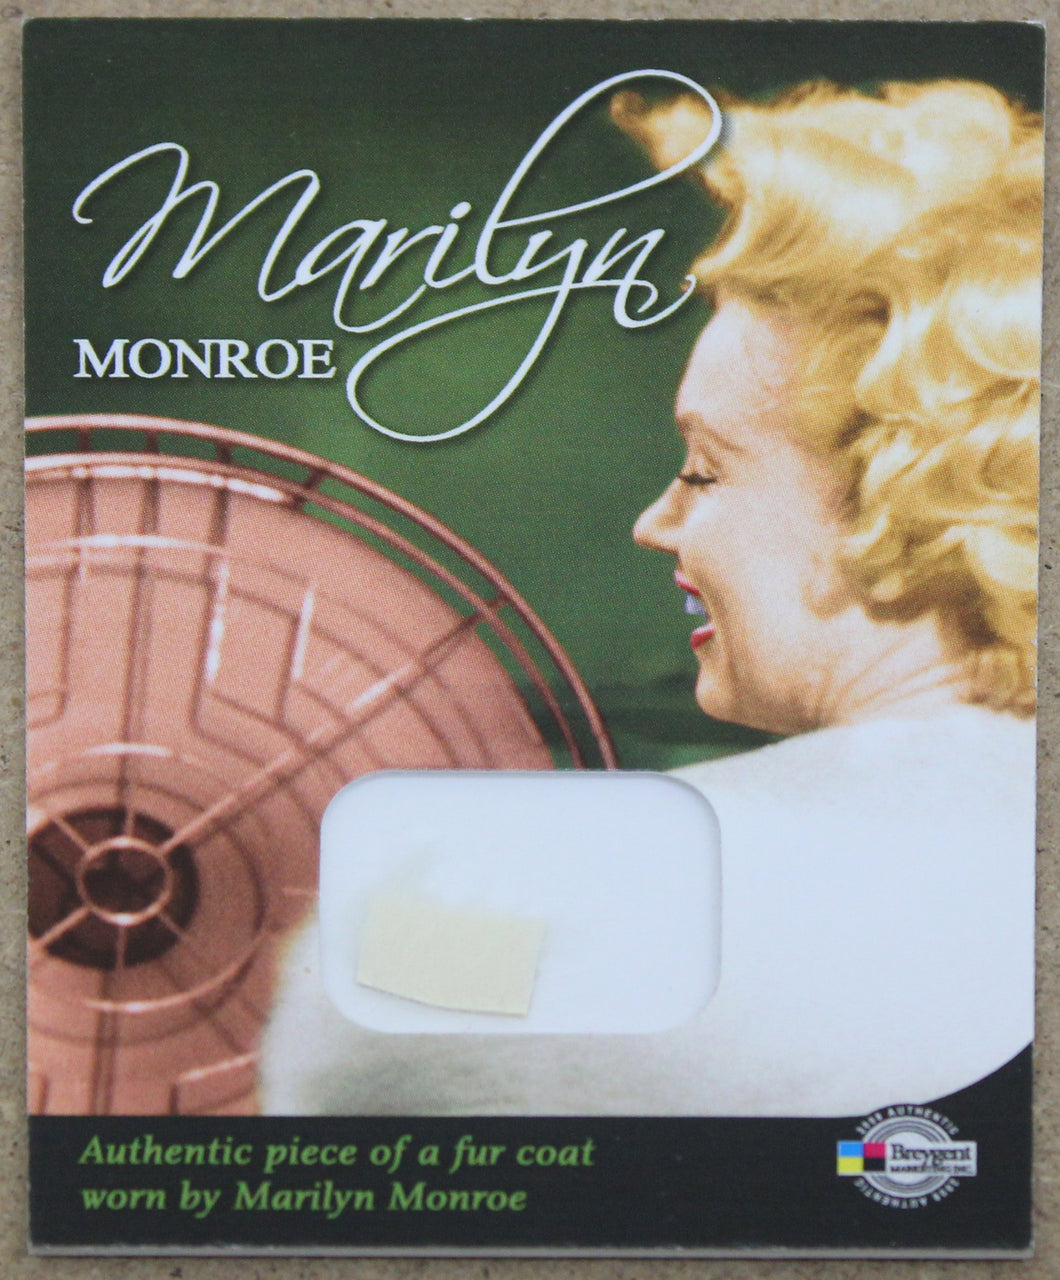 Marilyn Monroe worn fur coat piece relic memorabilia card 2008 Breygent